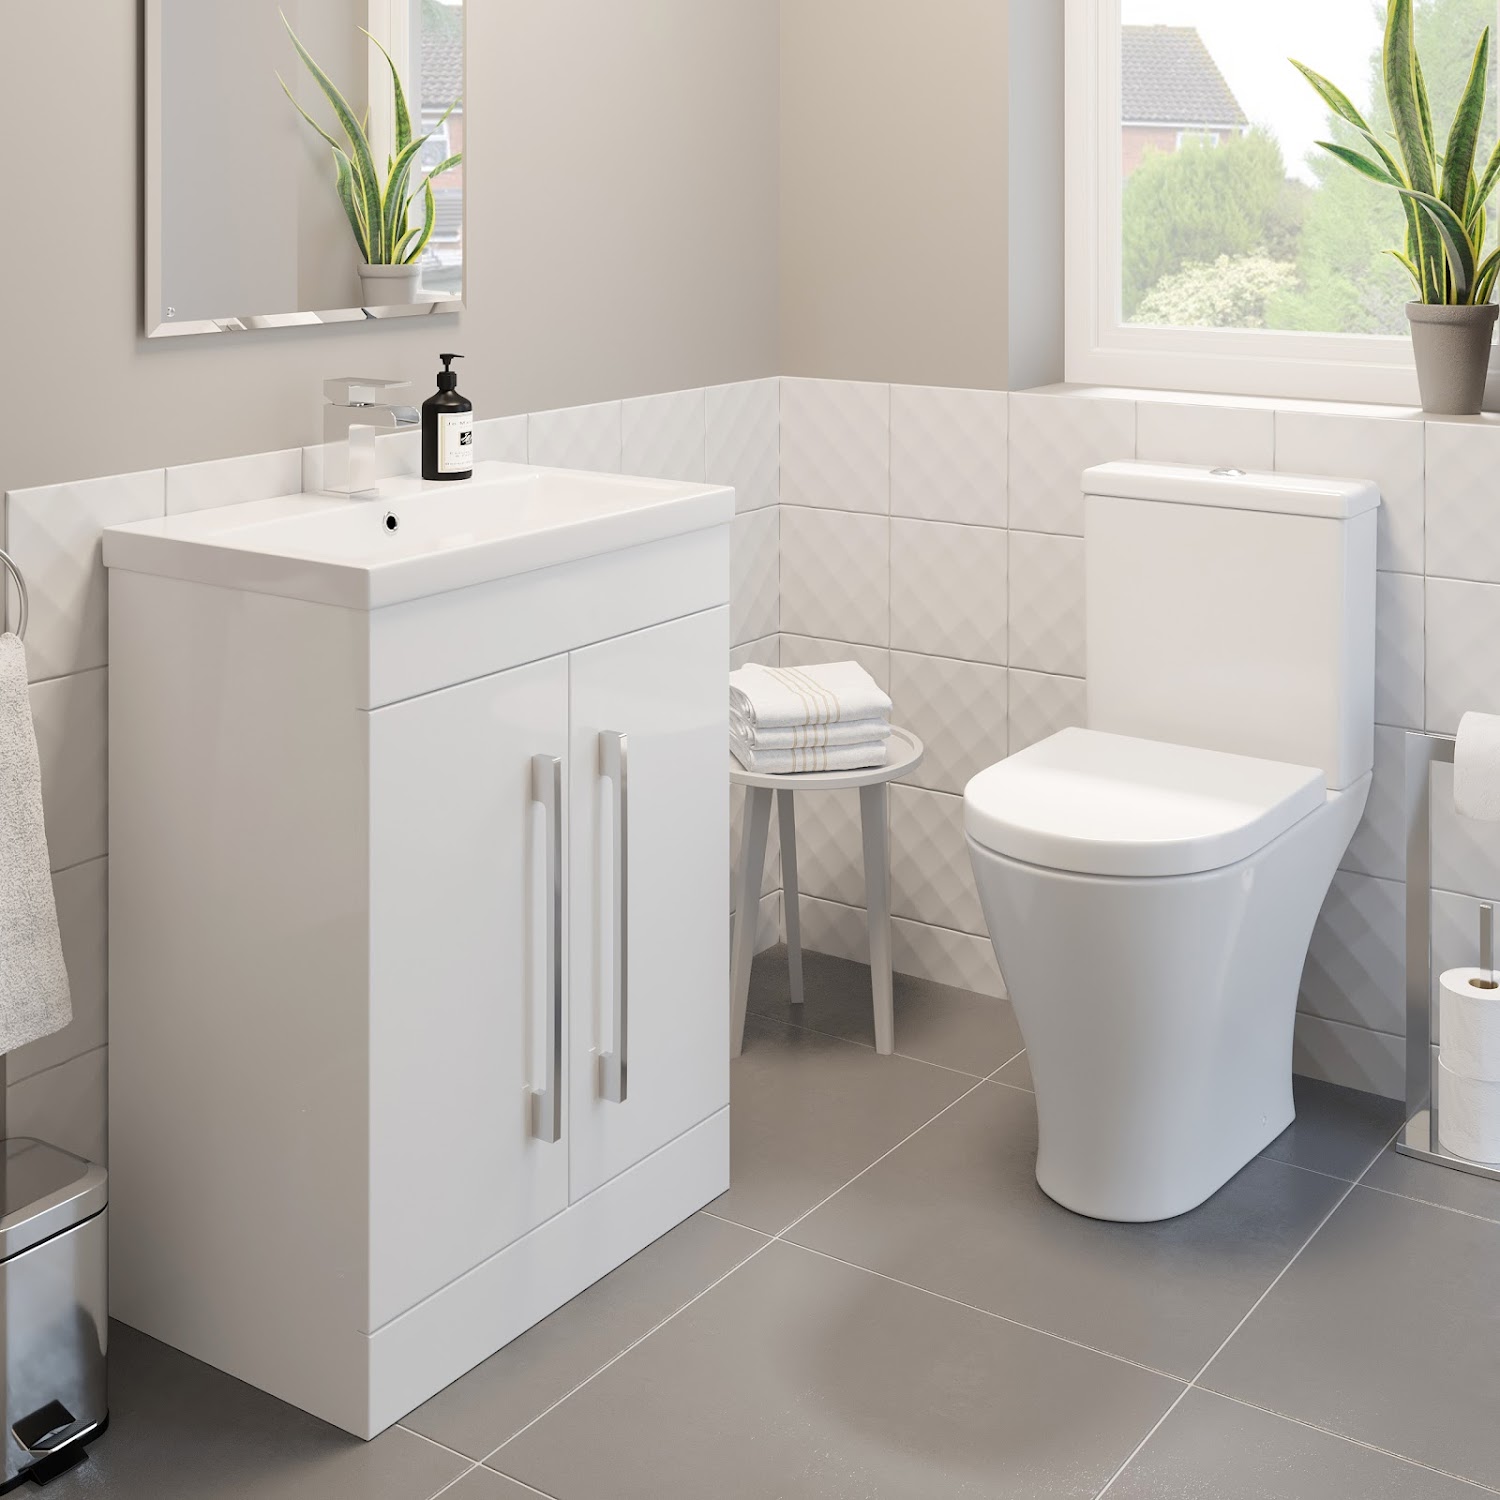 600mm Bathroom Gloss White Vanity Unit Basin Sink Modern Close Coupled ...